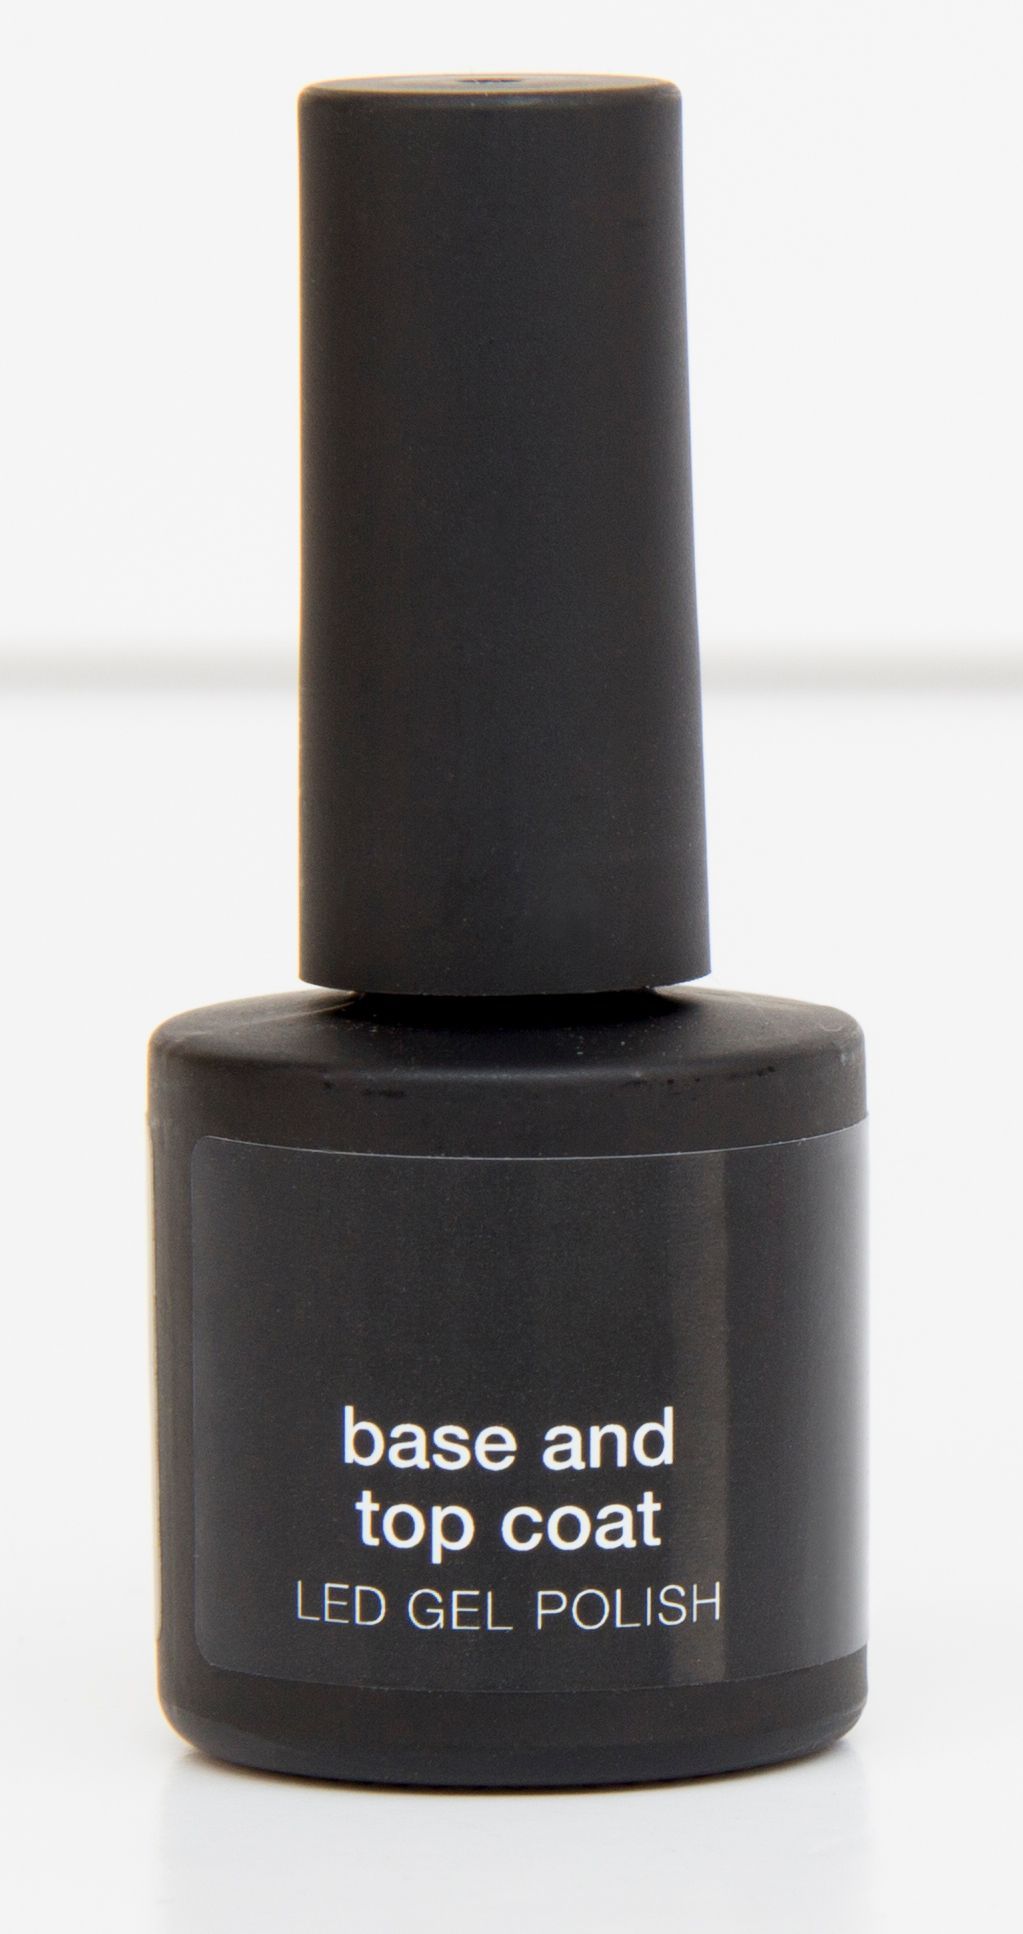 base and top coat LED gel polish bottle